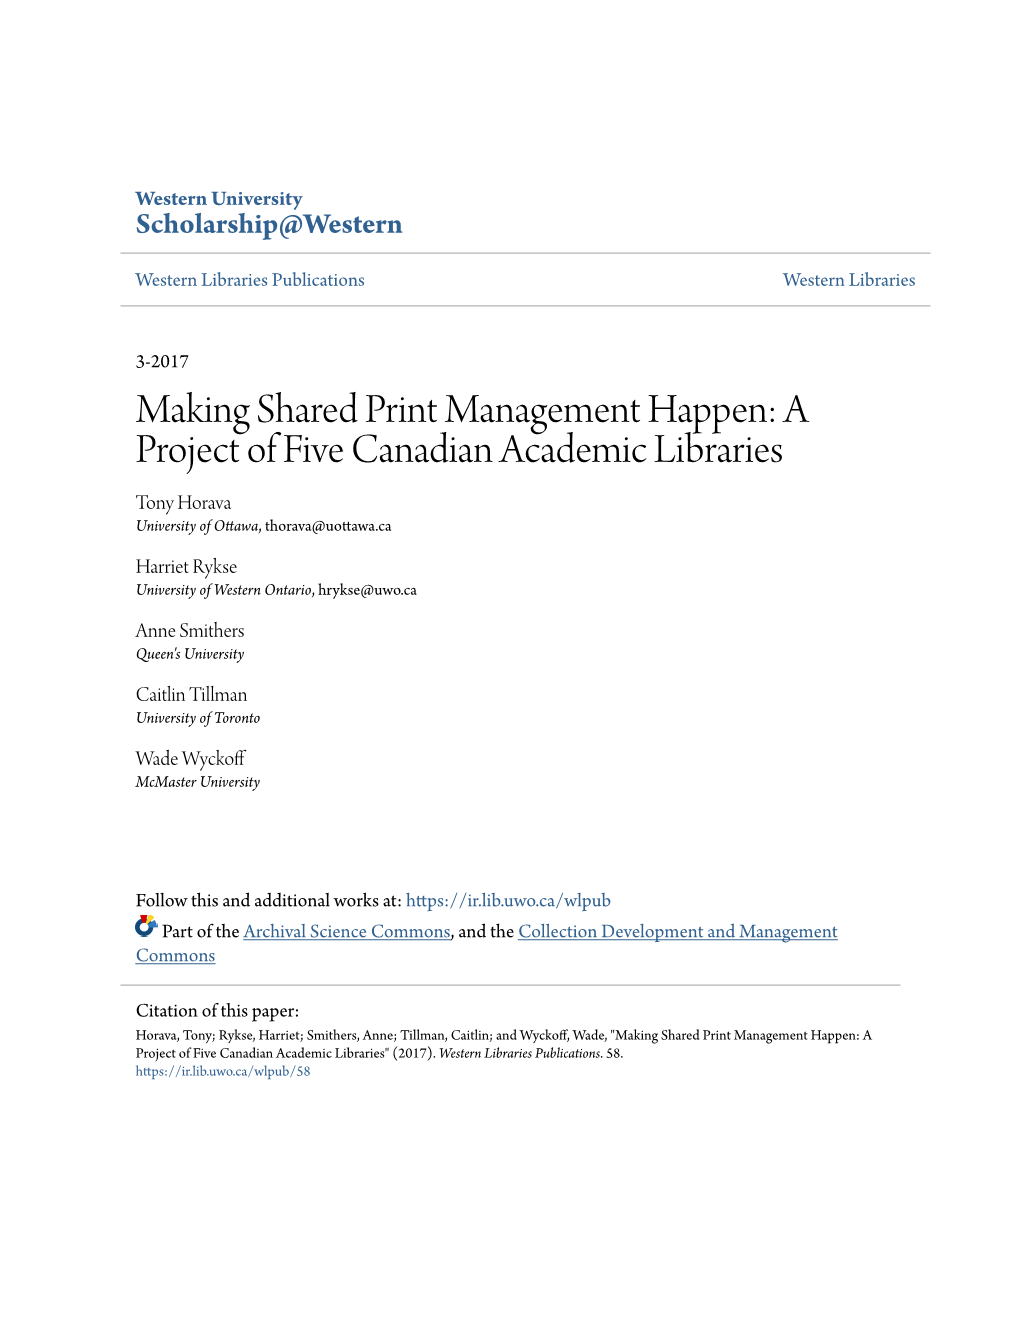 A Project of Five Canadian Academic Libraries Tony Horava University of Ottawa, Thorava@Uottawa.Ca